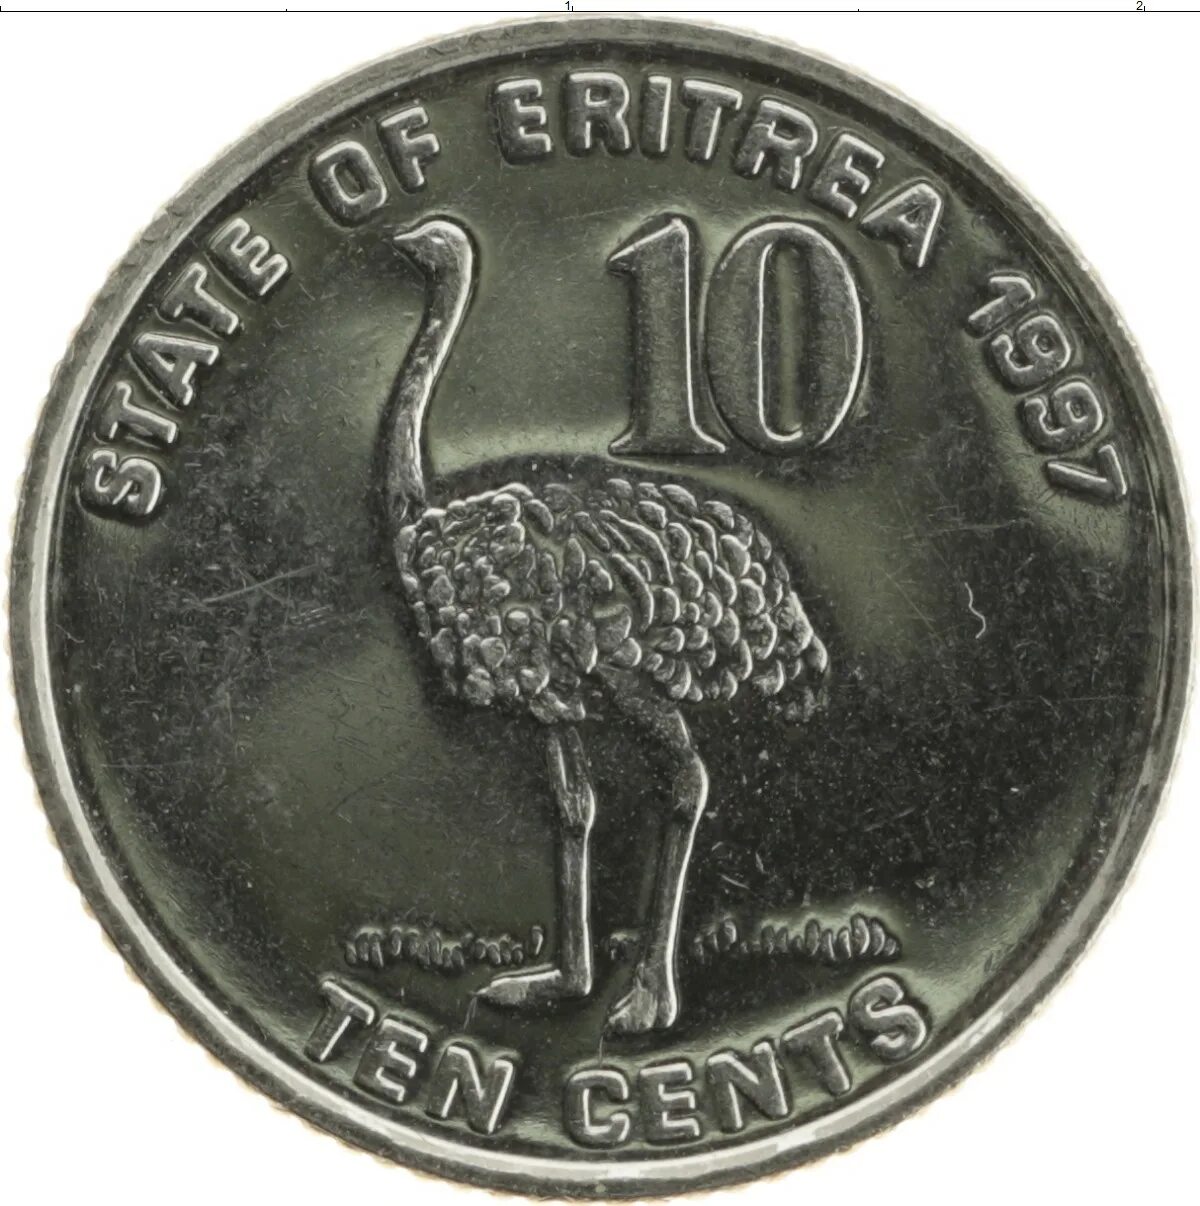 Africa 10. Монеты Африки. State of Eritrea 1997 10 Cents. Монеты Африки 2023. Монета Африки 1 Лев Эритрея.